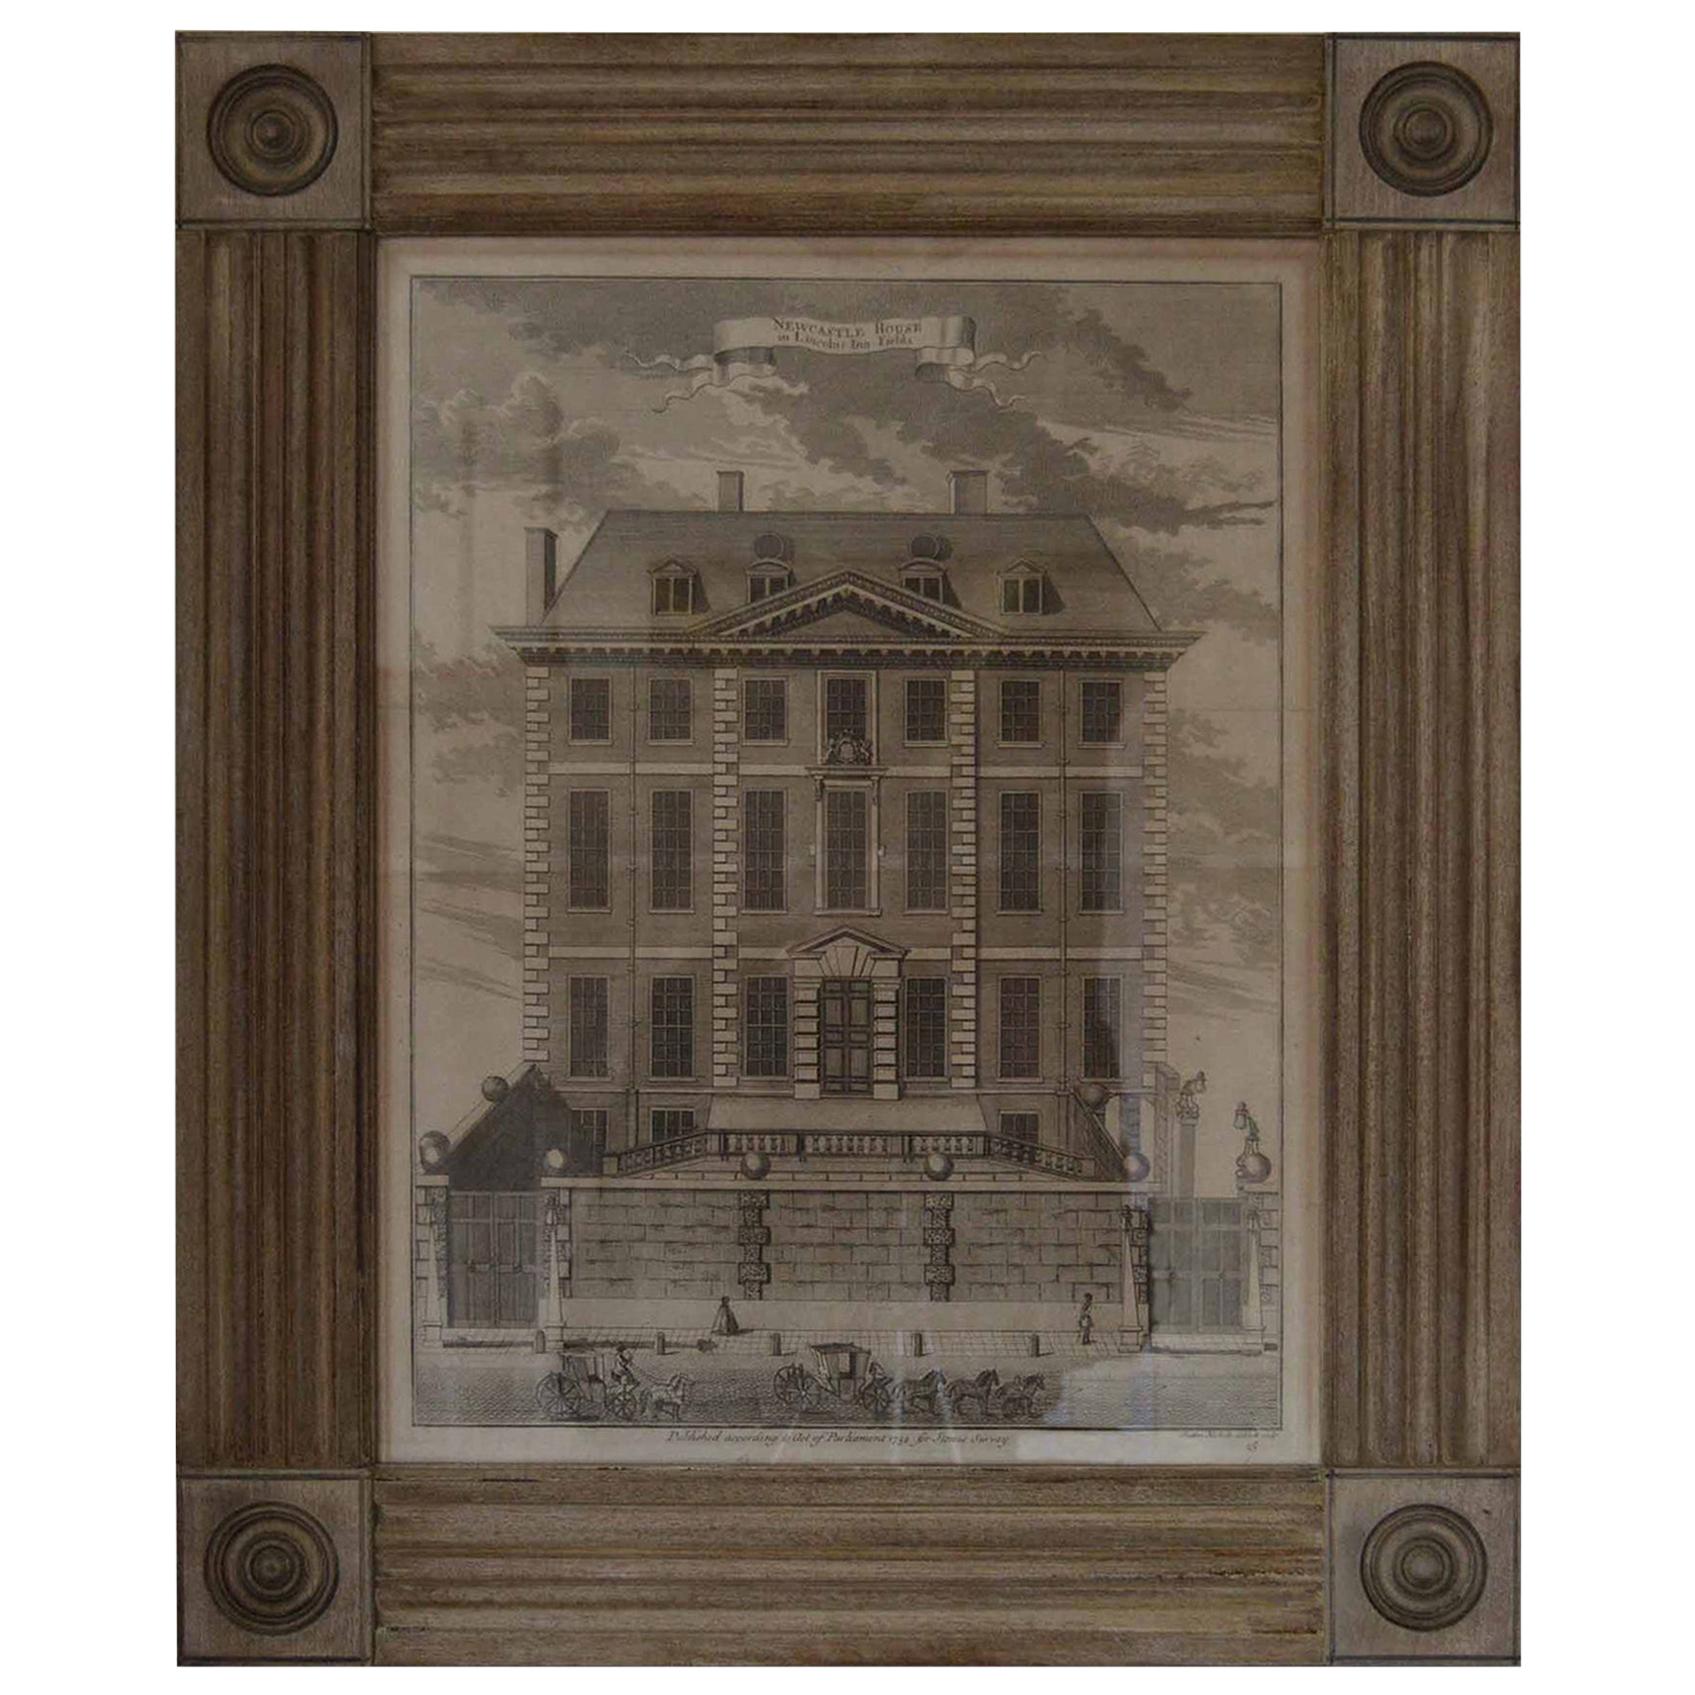 Antique Architectural Print, Newcastle House, London, 1754